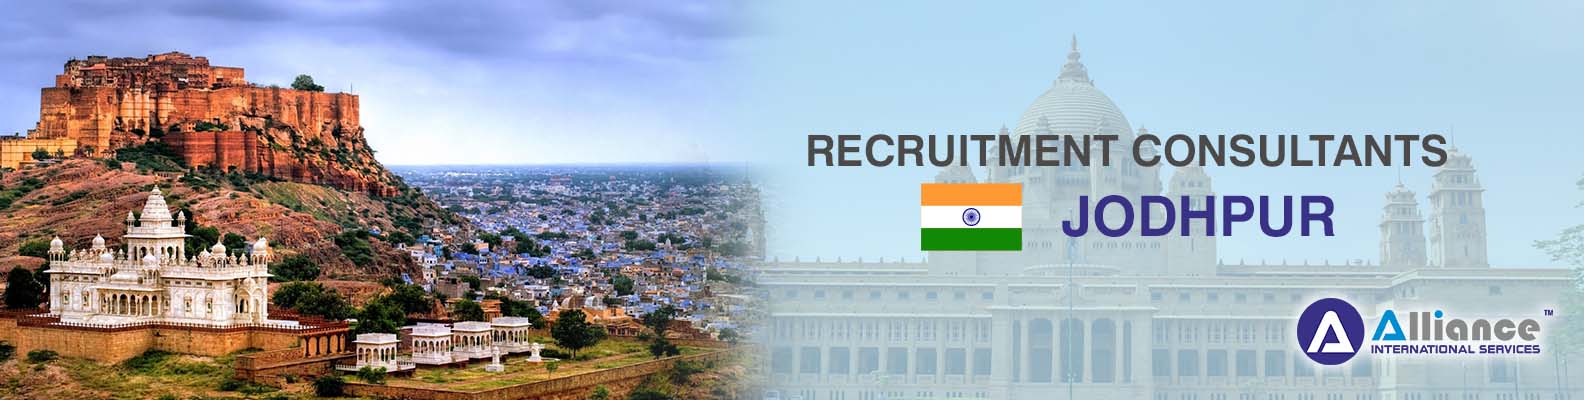 Recruitment Consultants Jodhpur